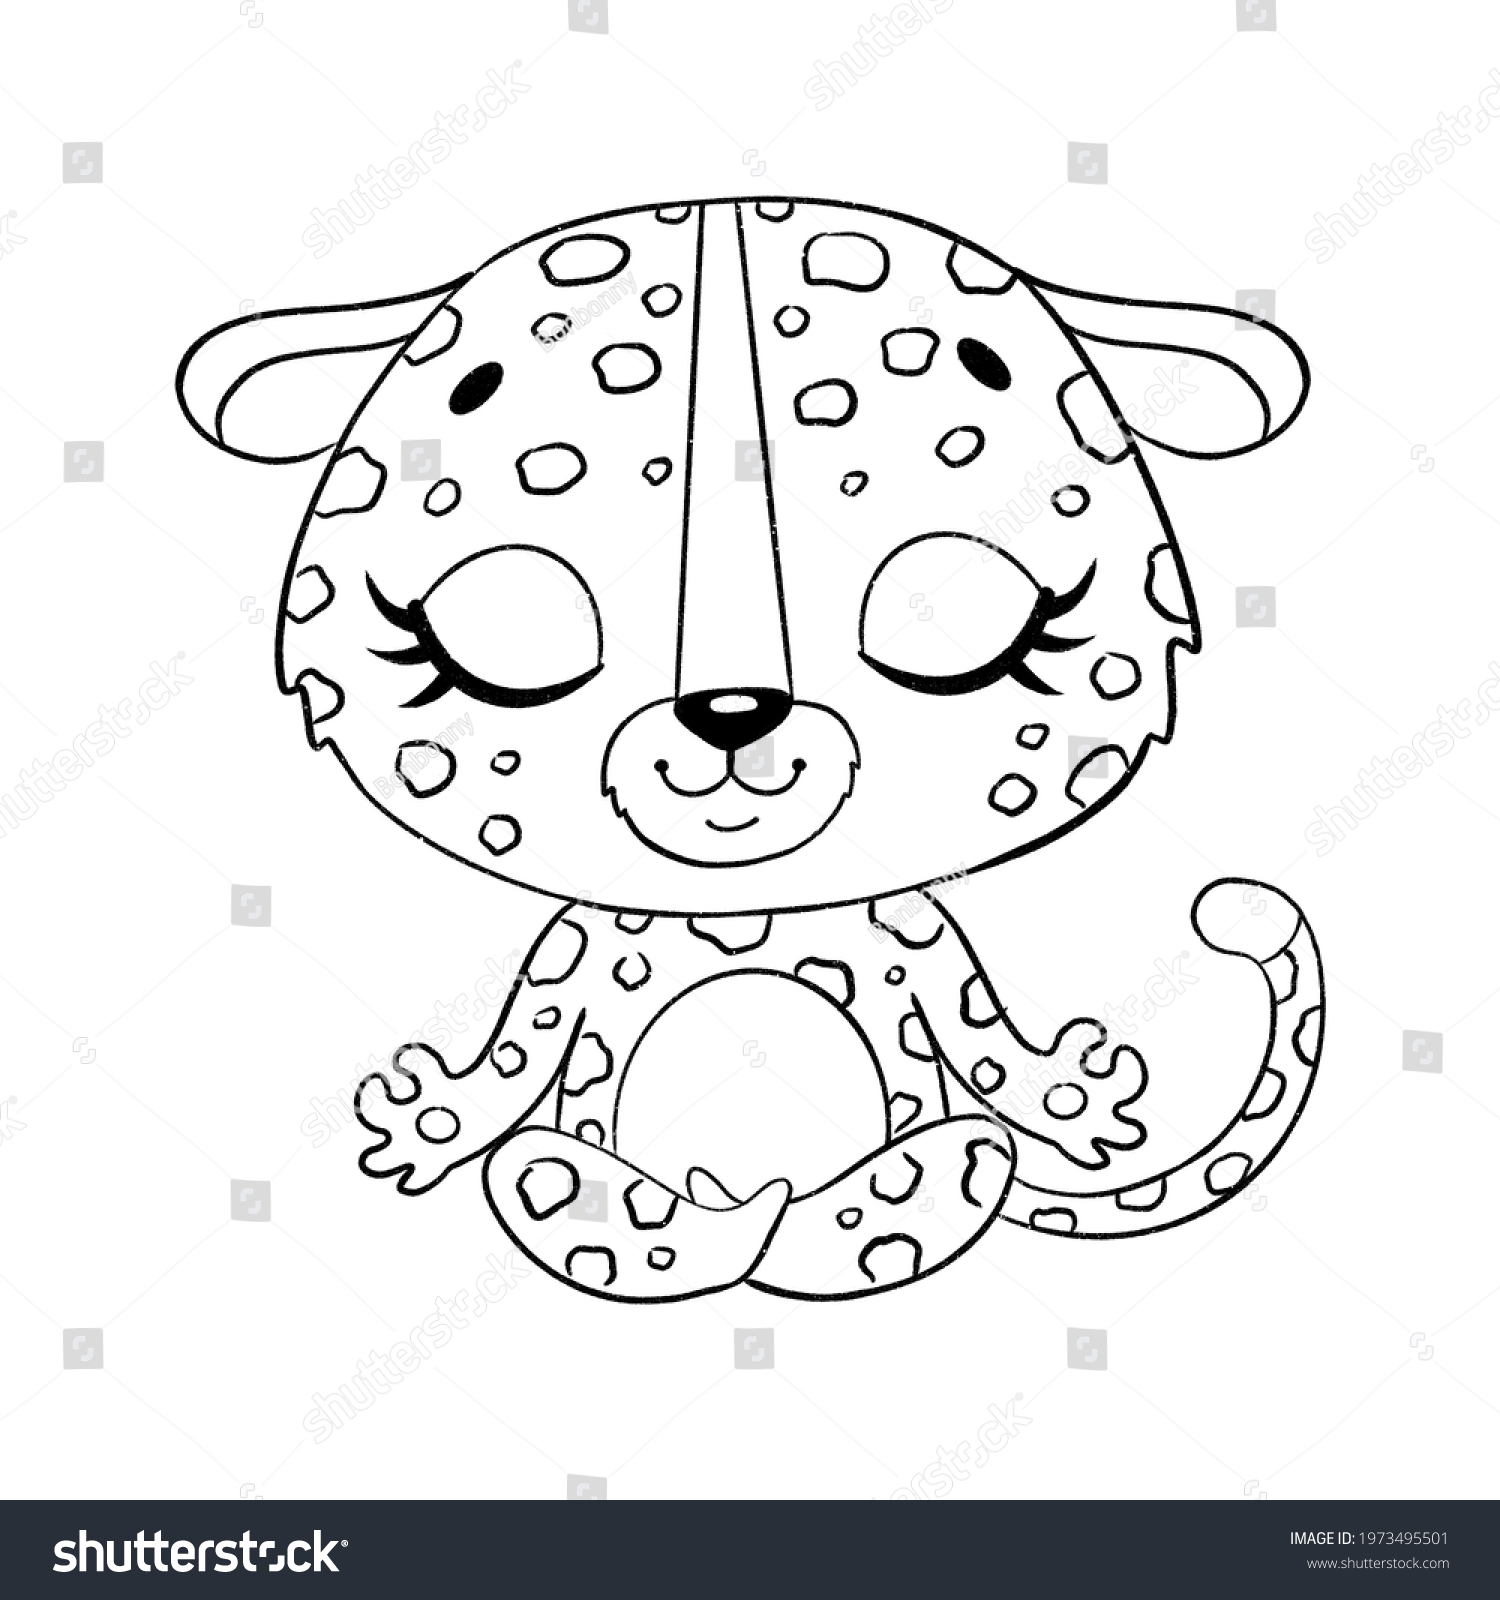 Cheetah doodle Images, Stock Photos & Vectors   Shutterstock